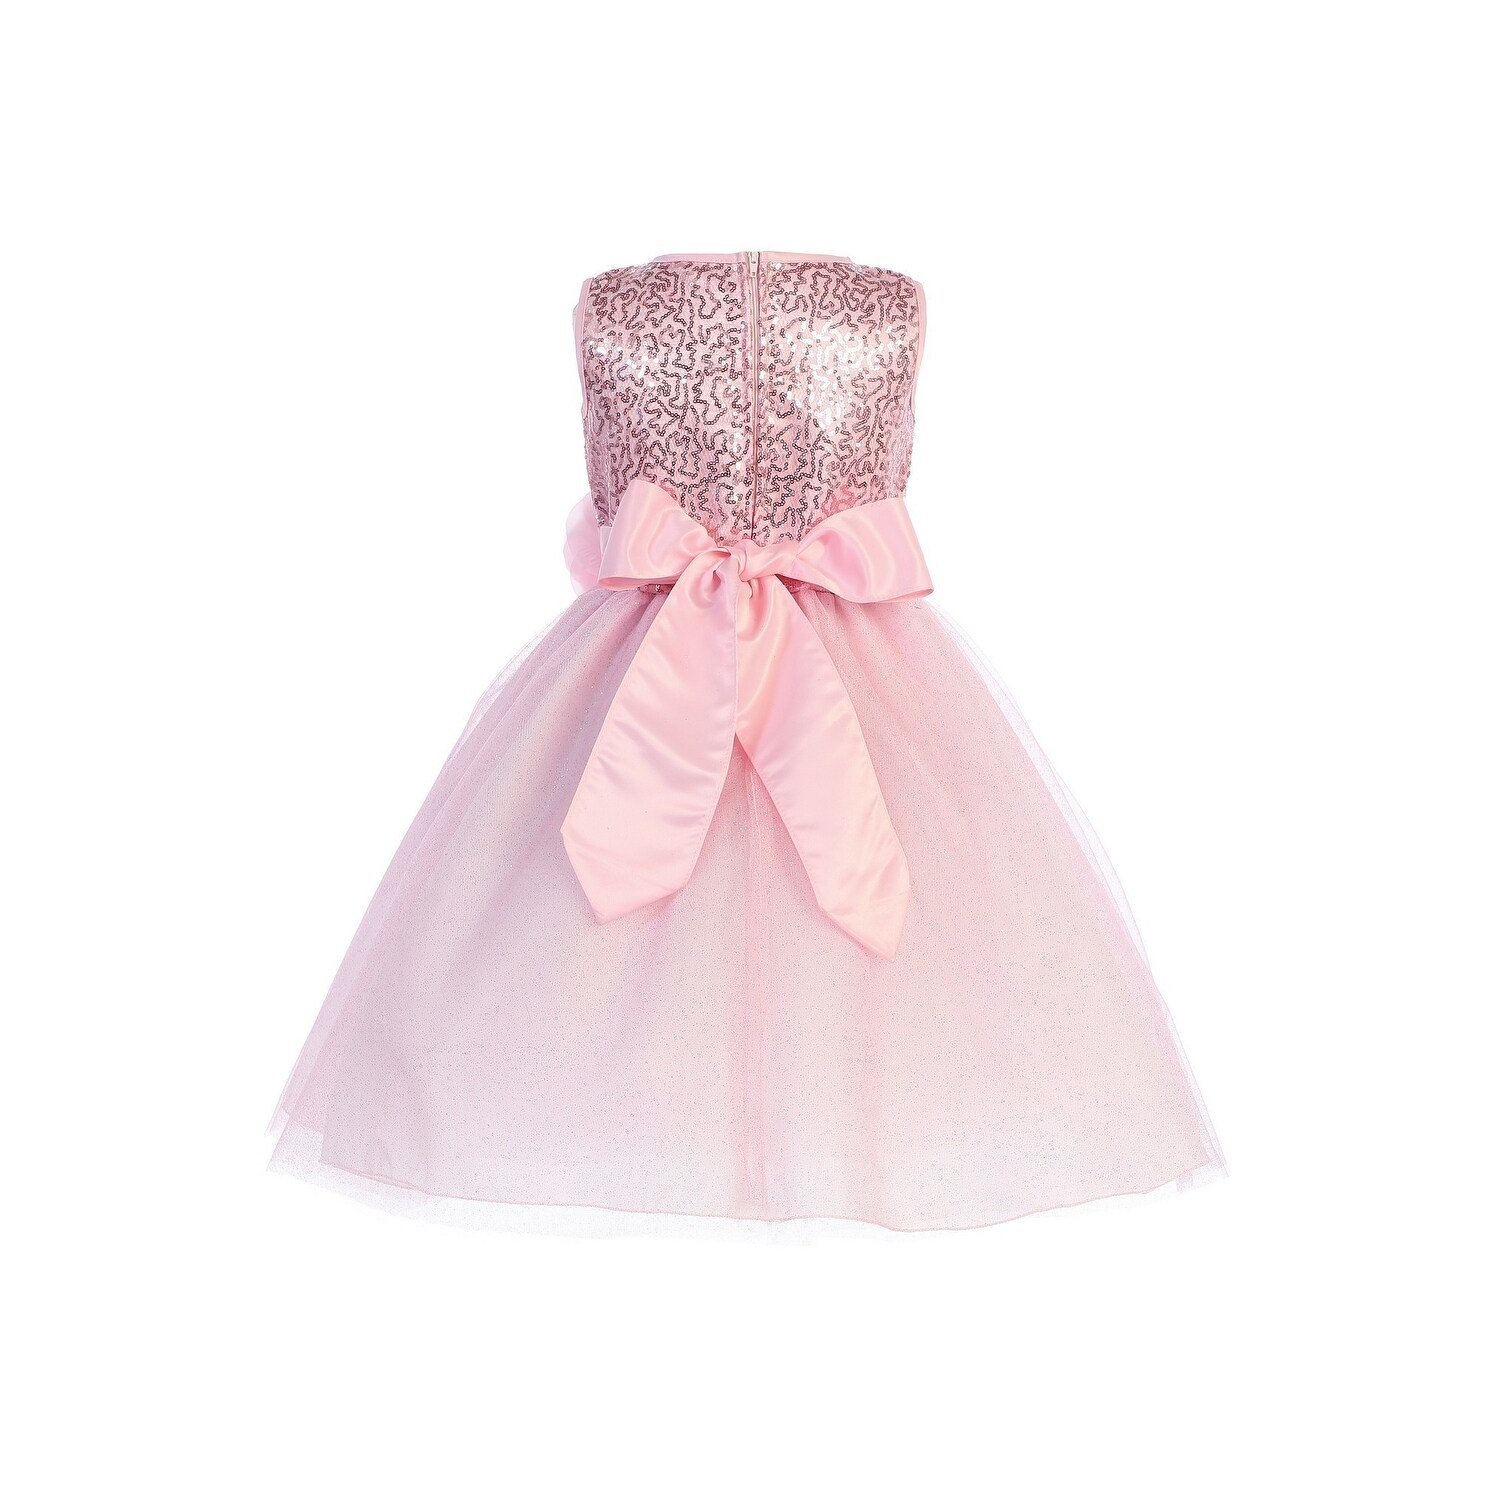 girls pink sparkly dress